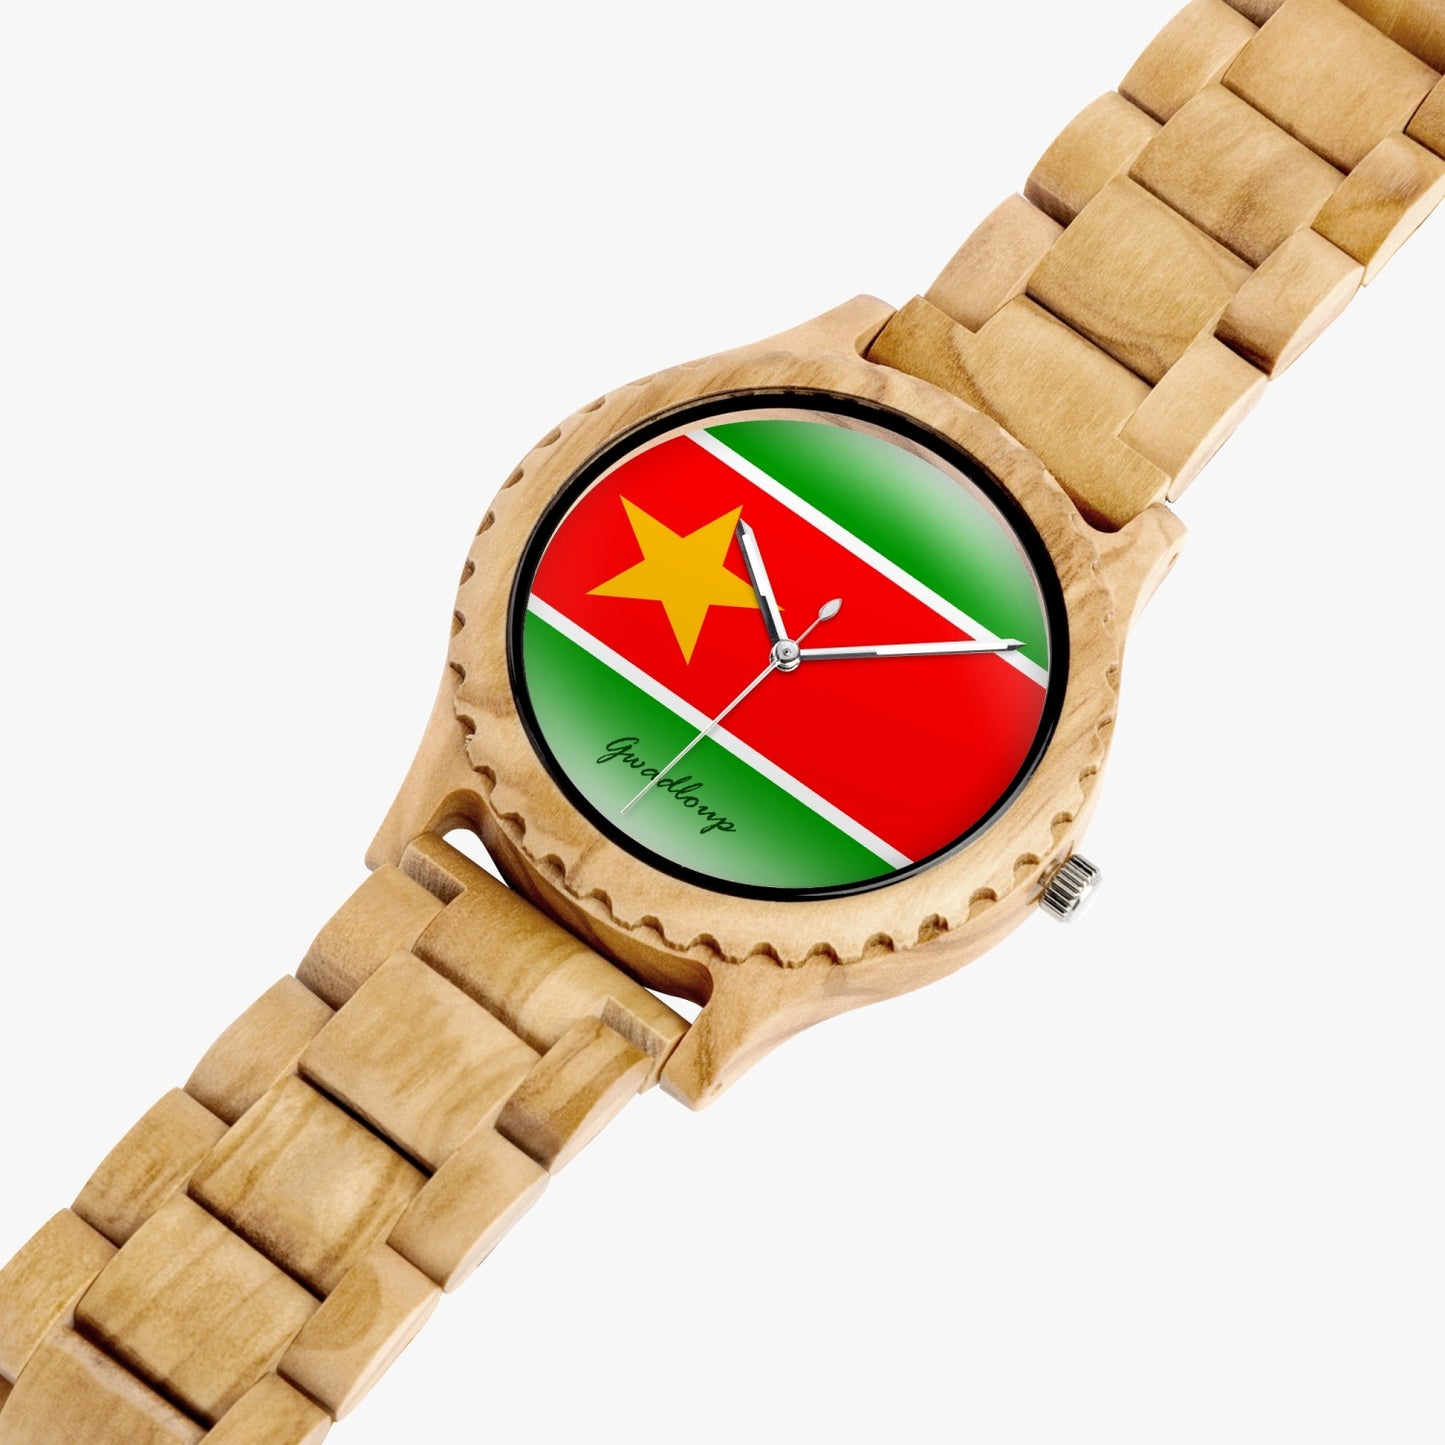 "Yellowstar" natural wood watch